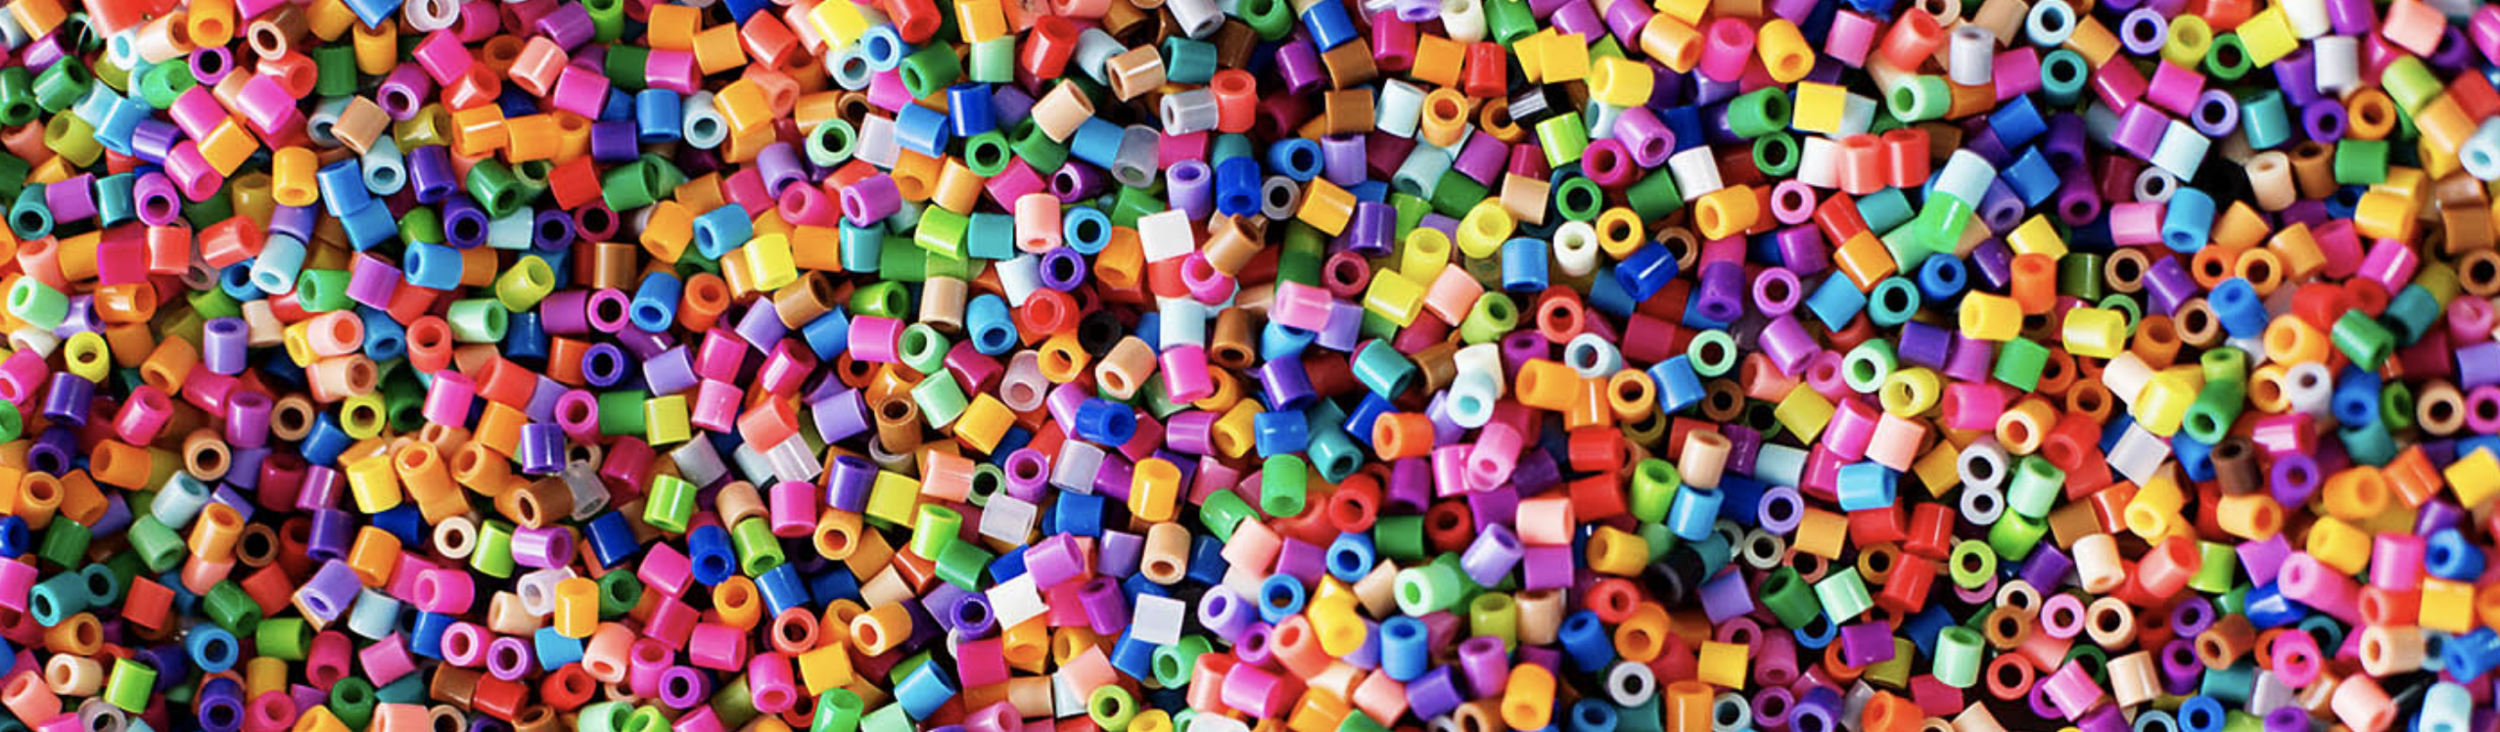 Wholesale 8 Colors DIY Fuse Beads Kit 